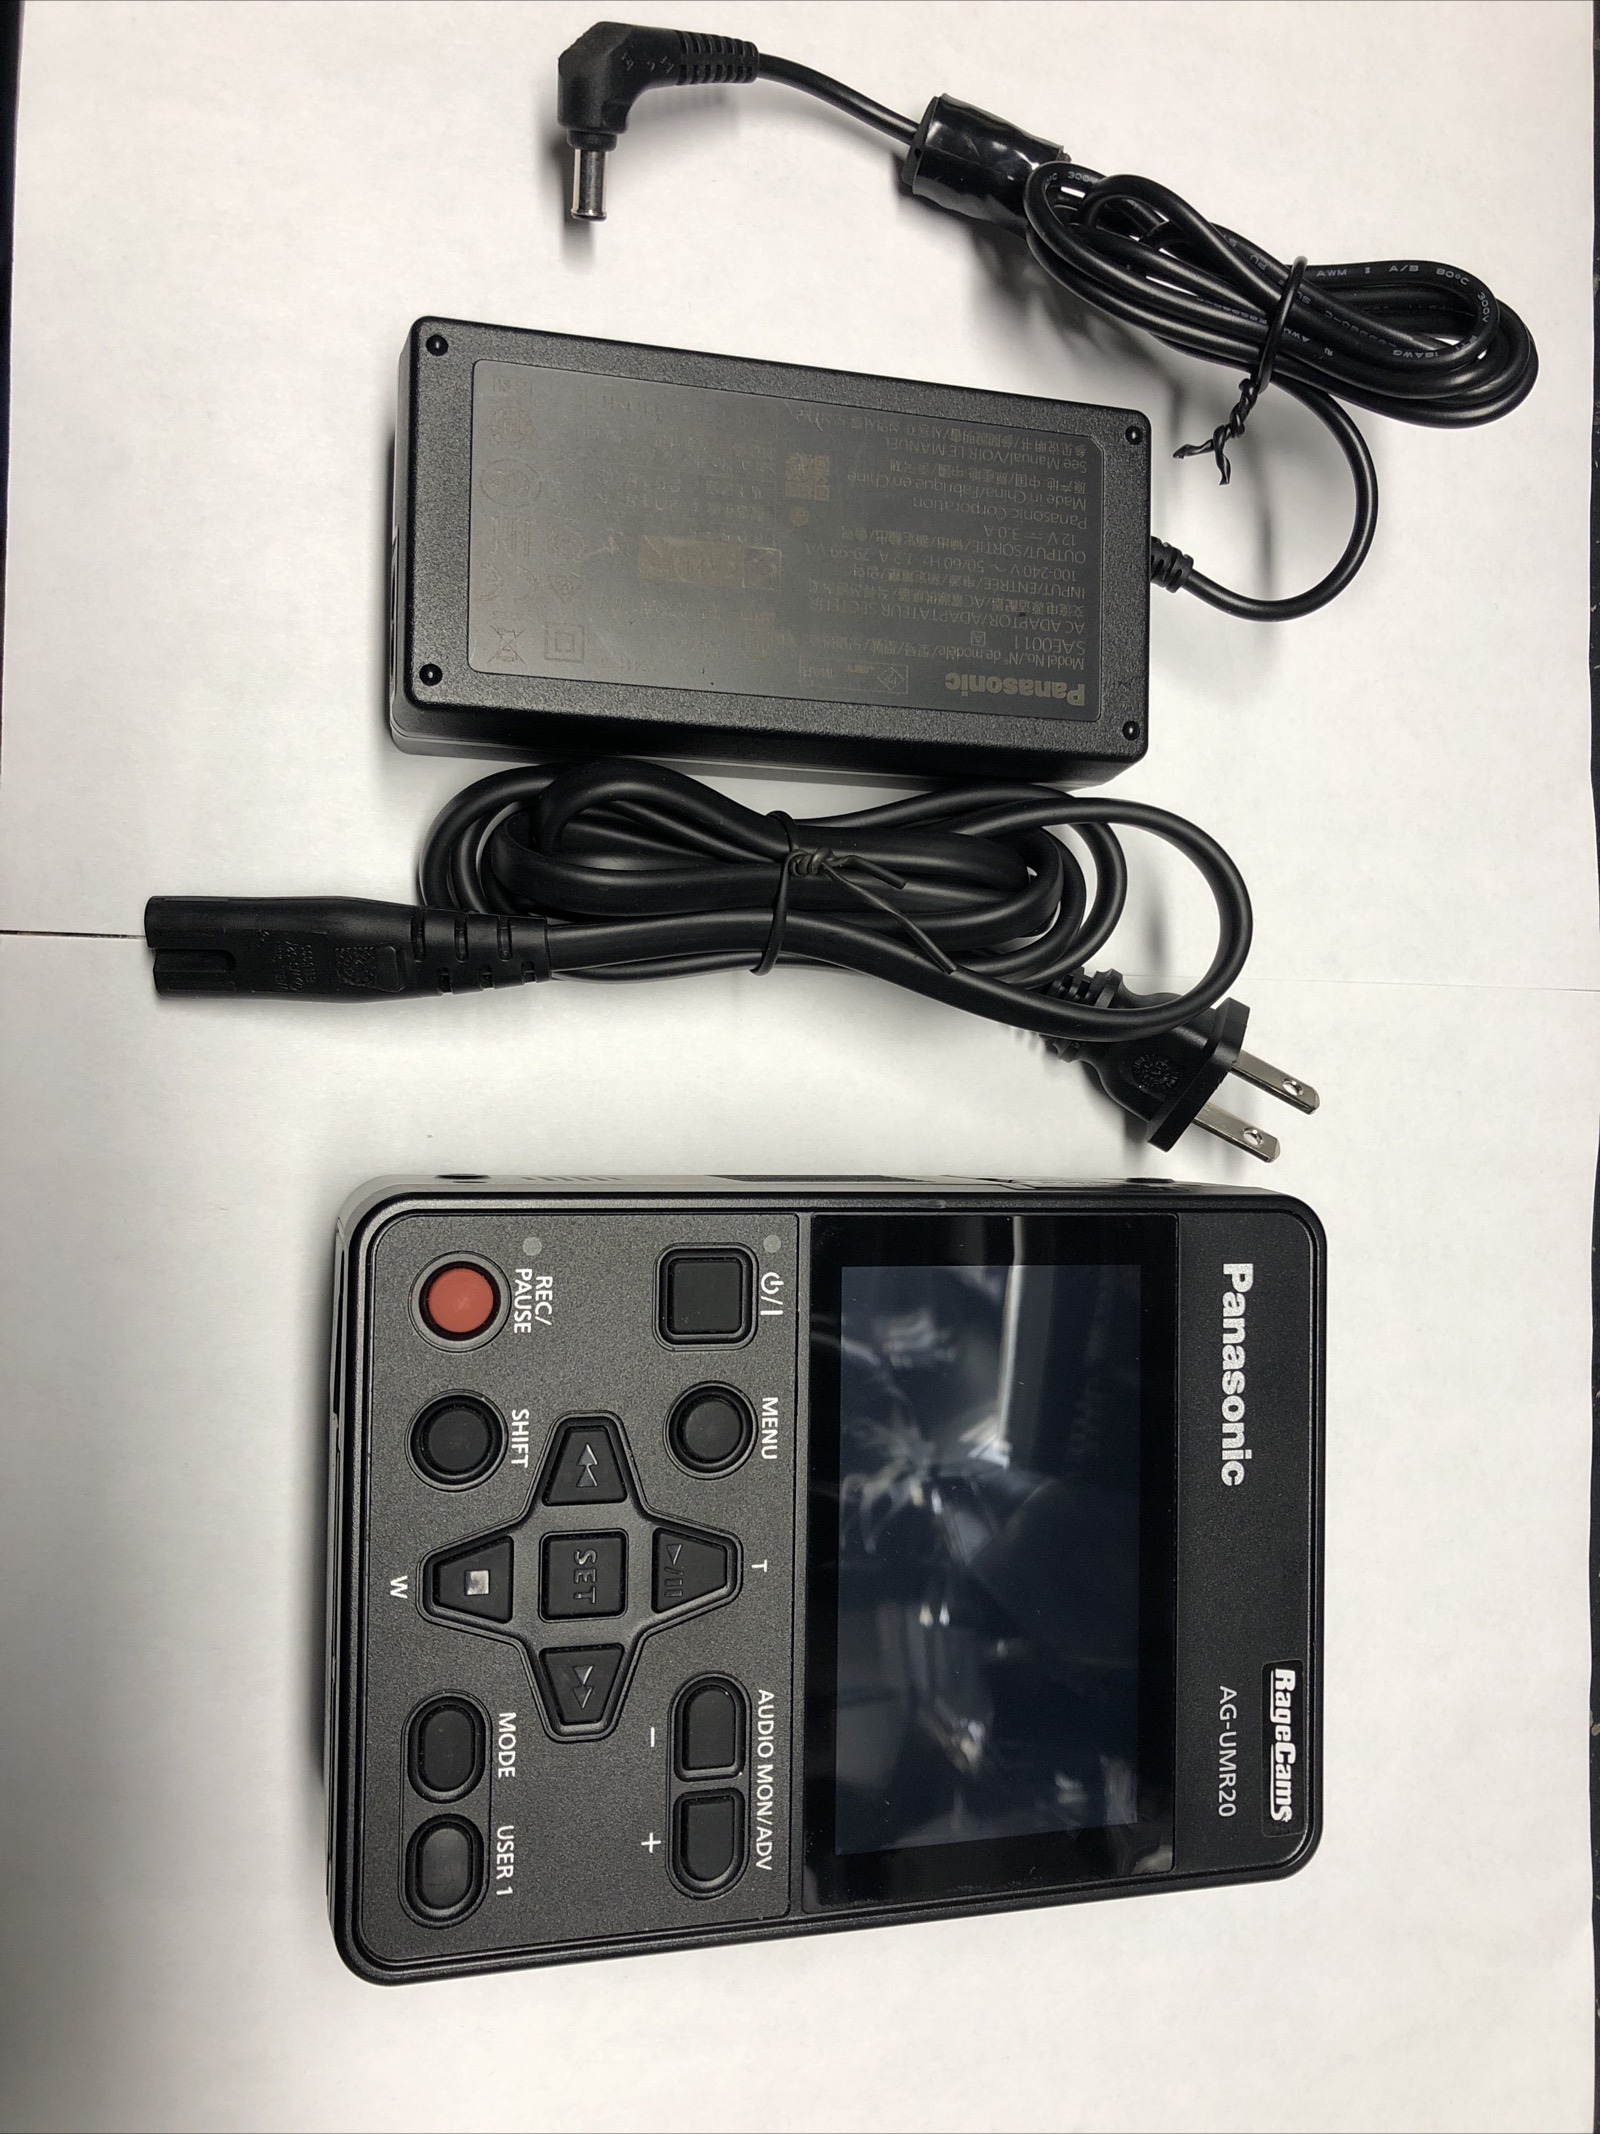 AG-UMR20 Panasonic Video Recorder